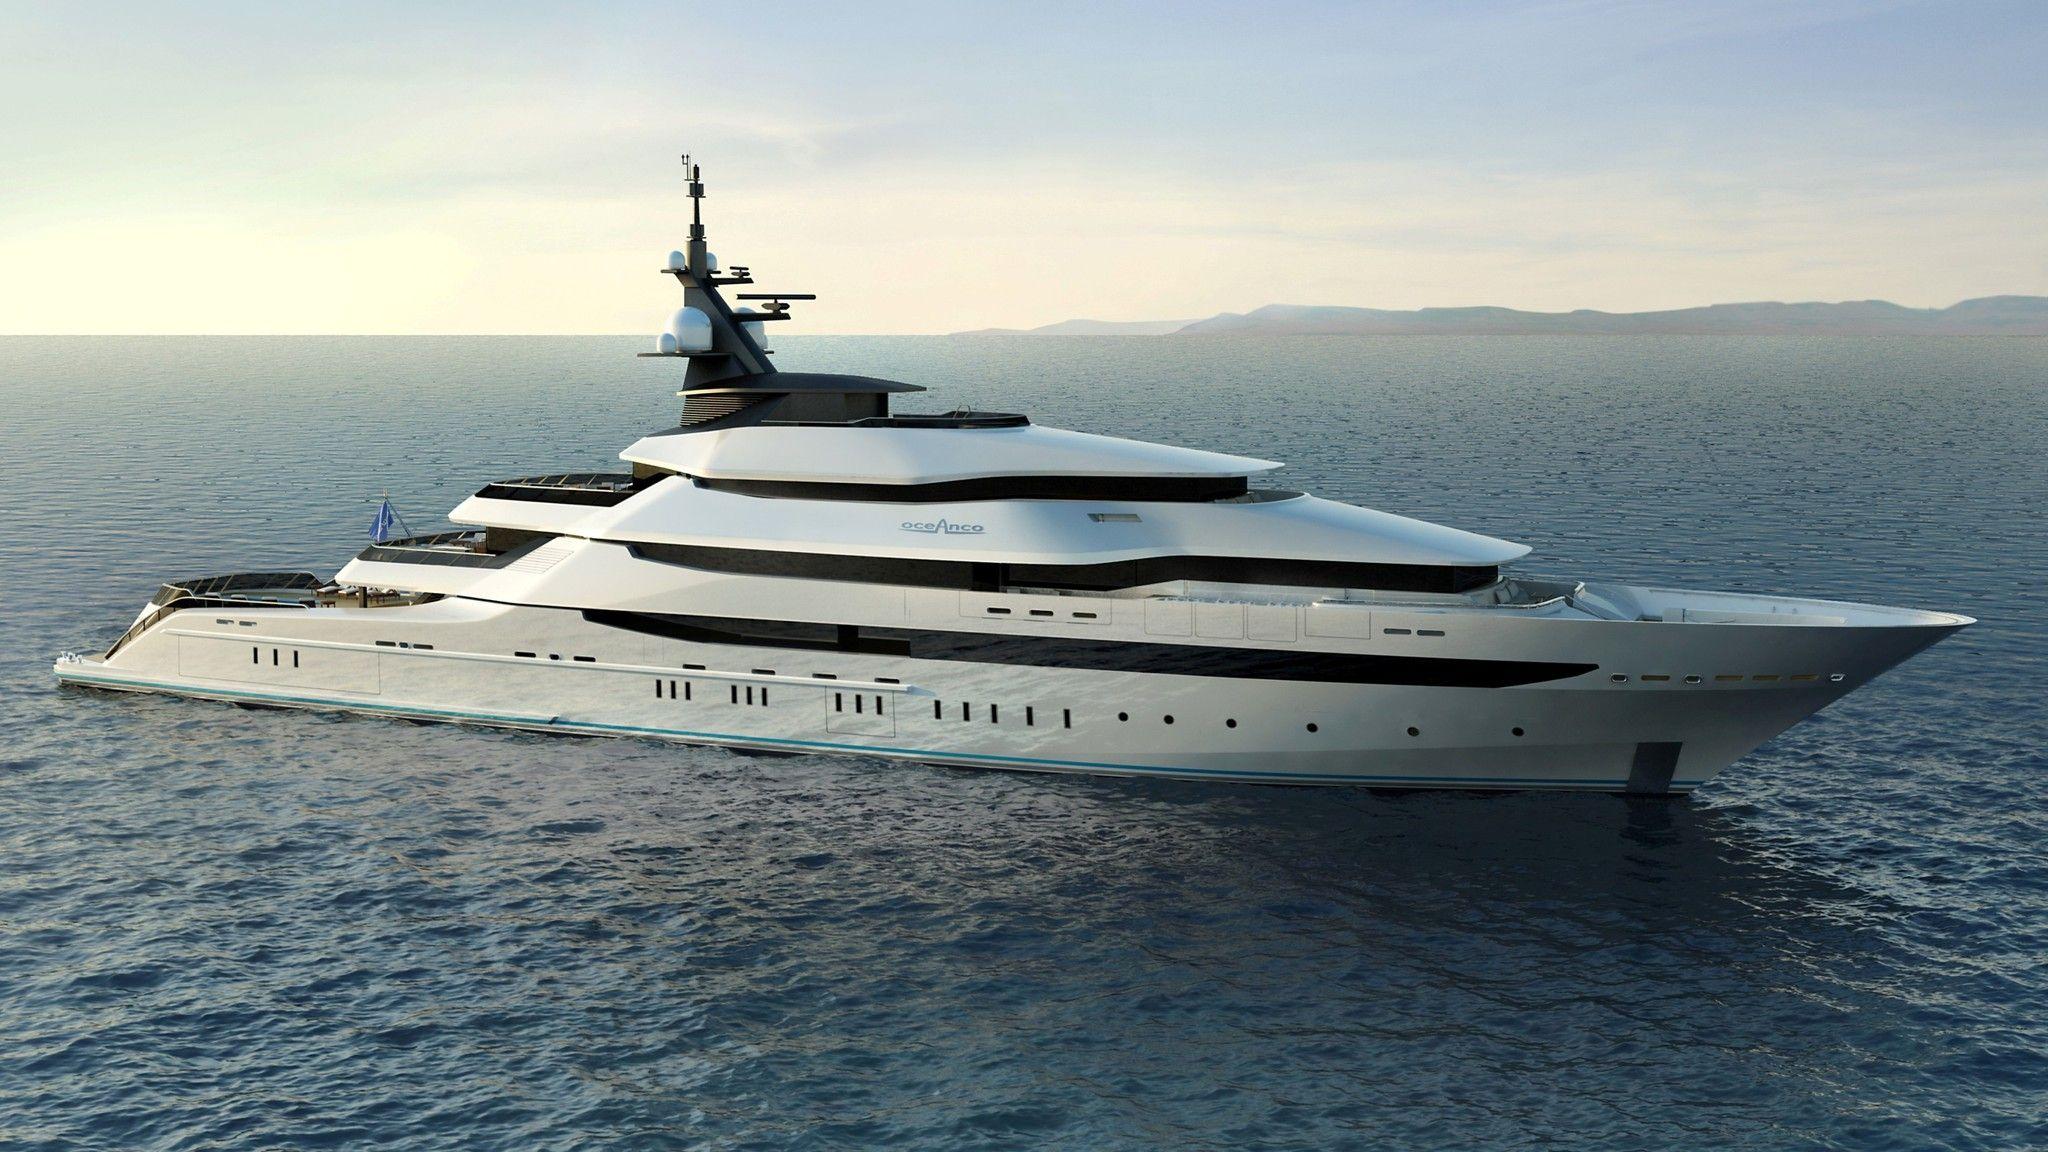 Ocean cgi yachts luxury boats oceanco sea wallpaper. AllWallpaper